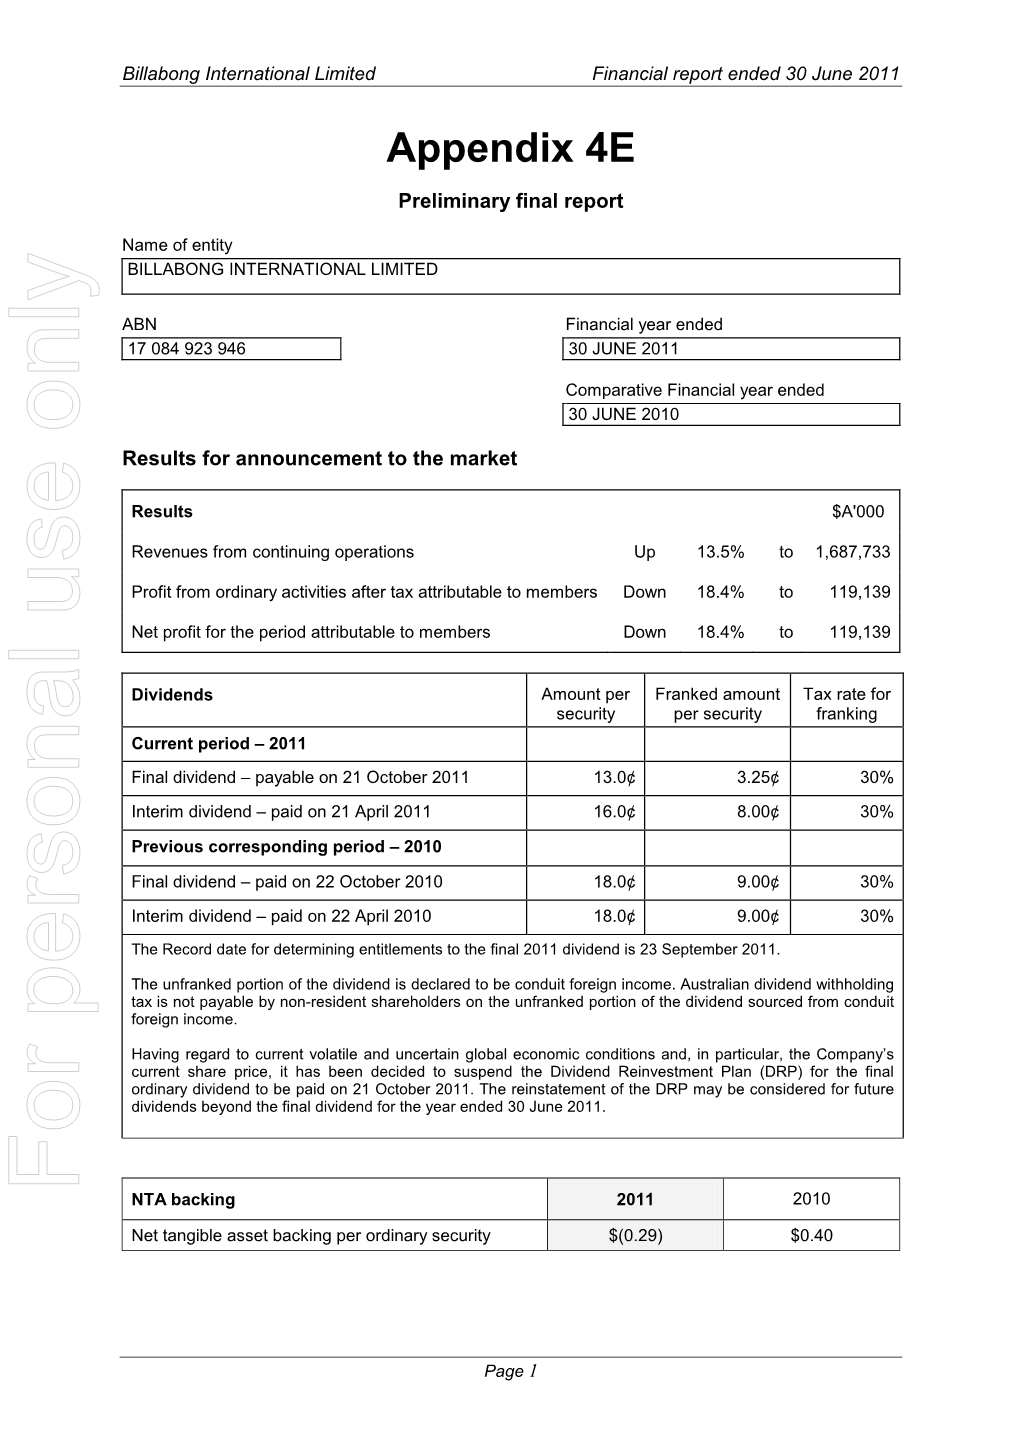 Billabong International Limited Financial Report Ended 30 June 2011